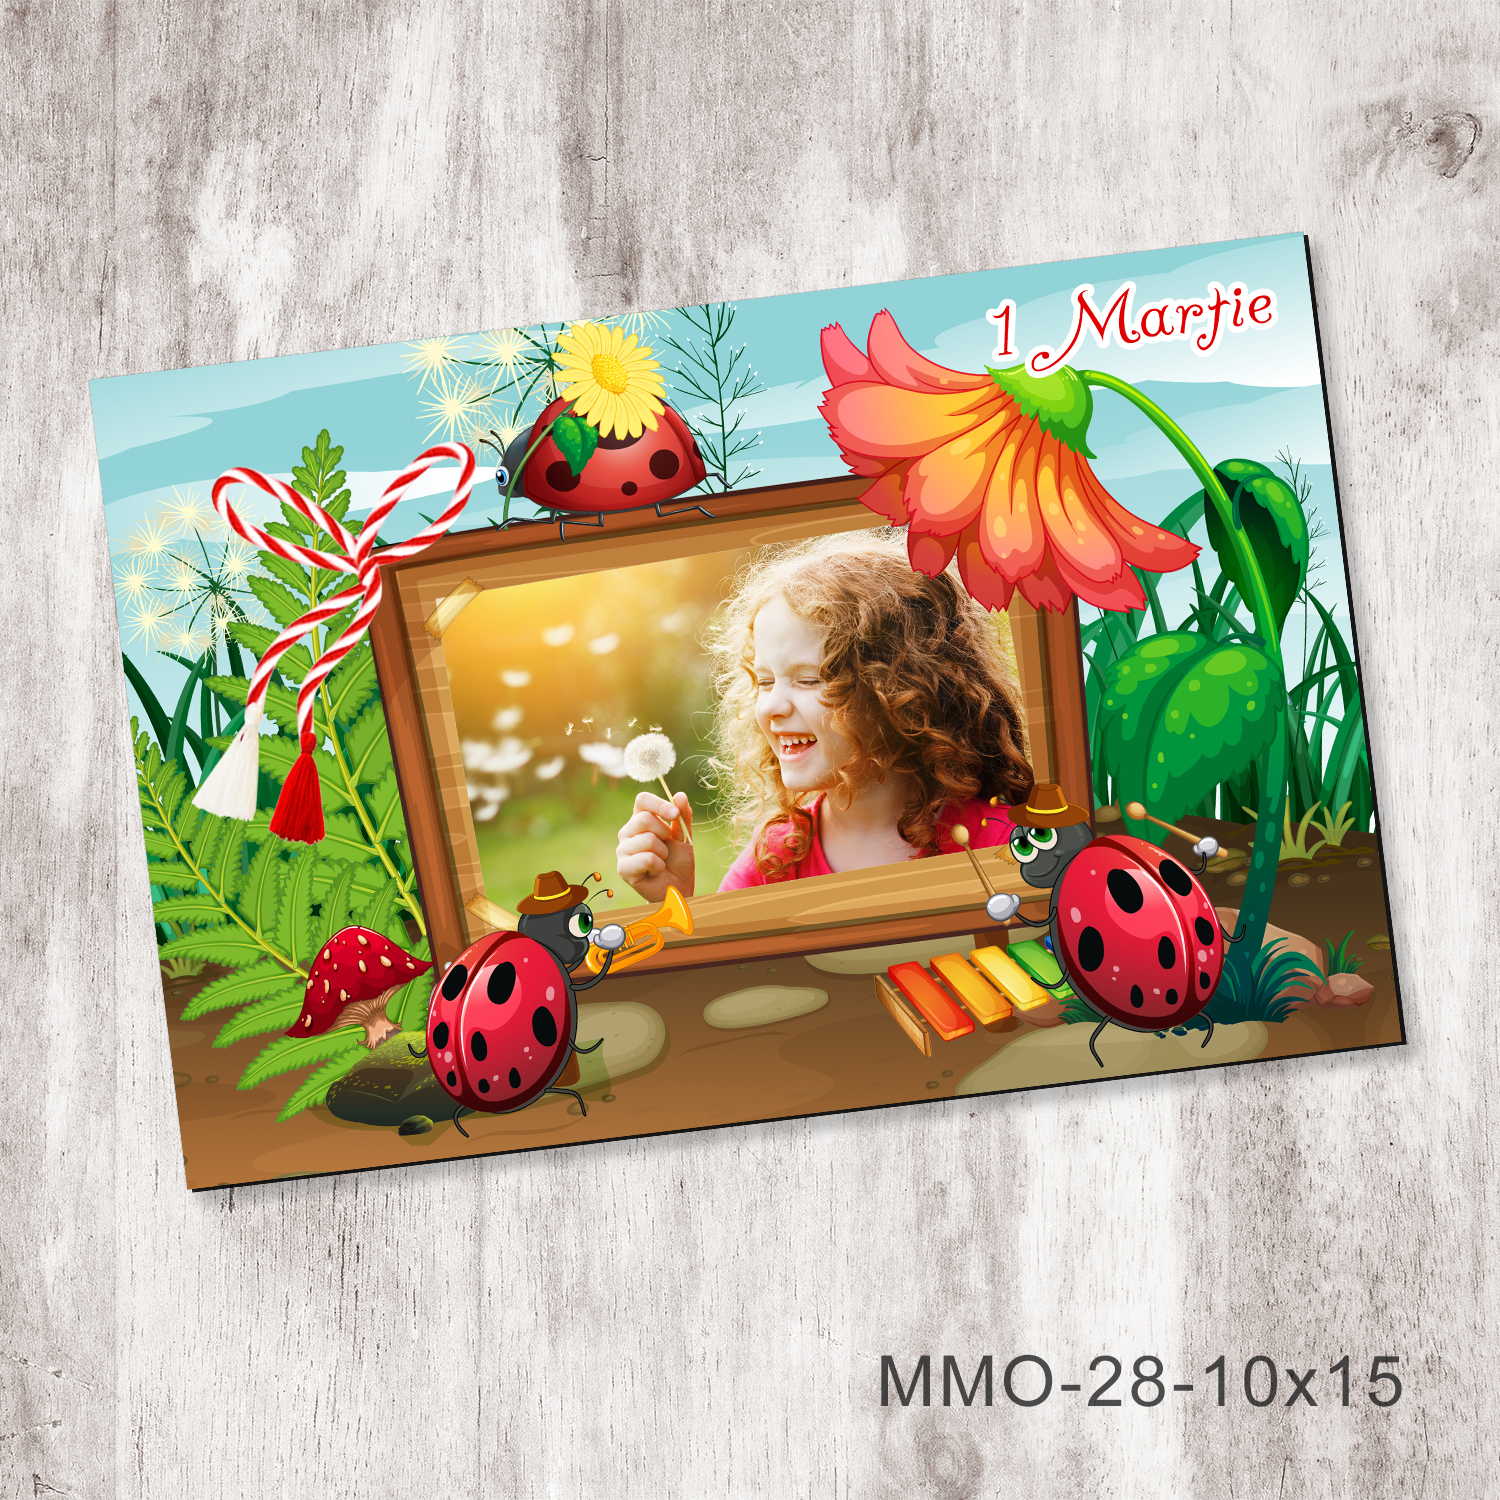 Magnet personalizat Martisor MMO-28-10X15